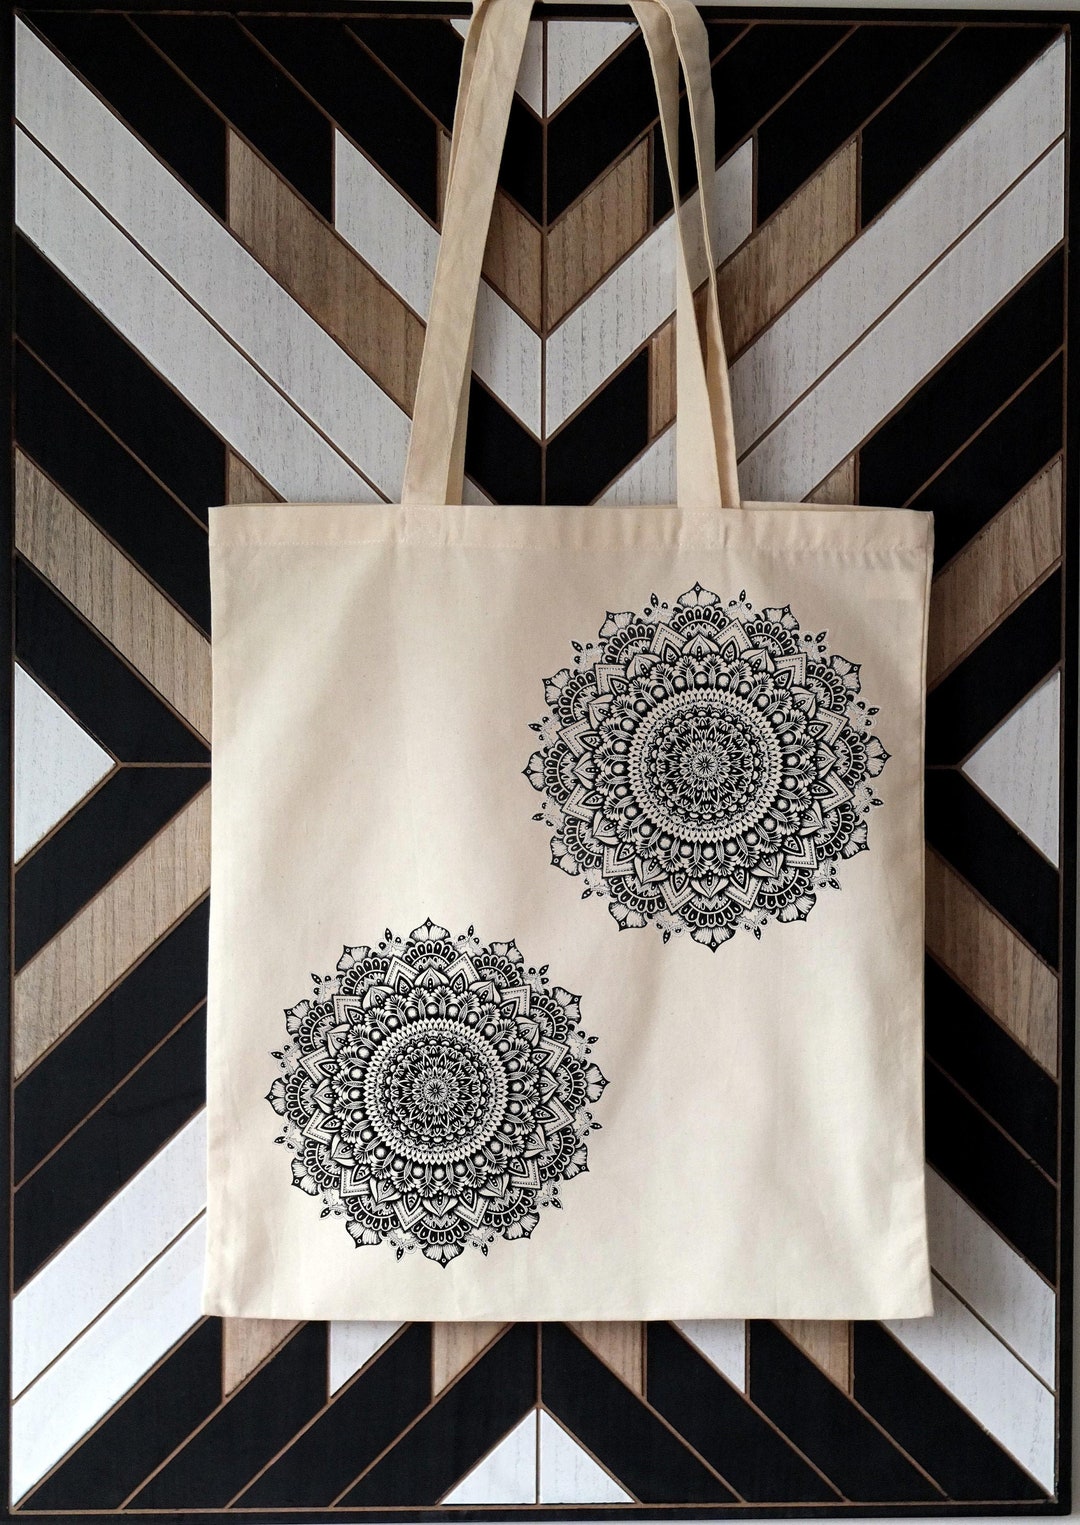 Mandala Shopping Bag Boho Gypsy Bag Cotton Shoulder Bag - Trade